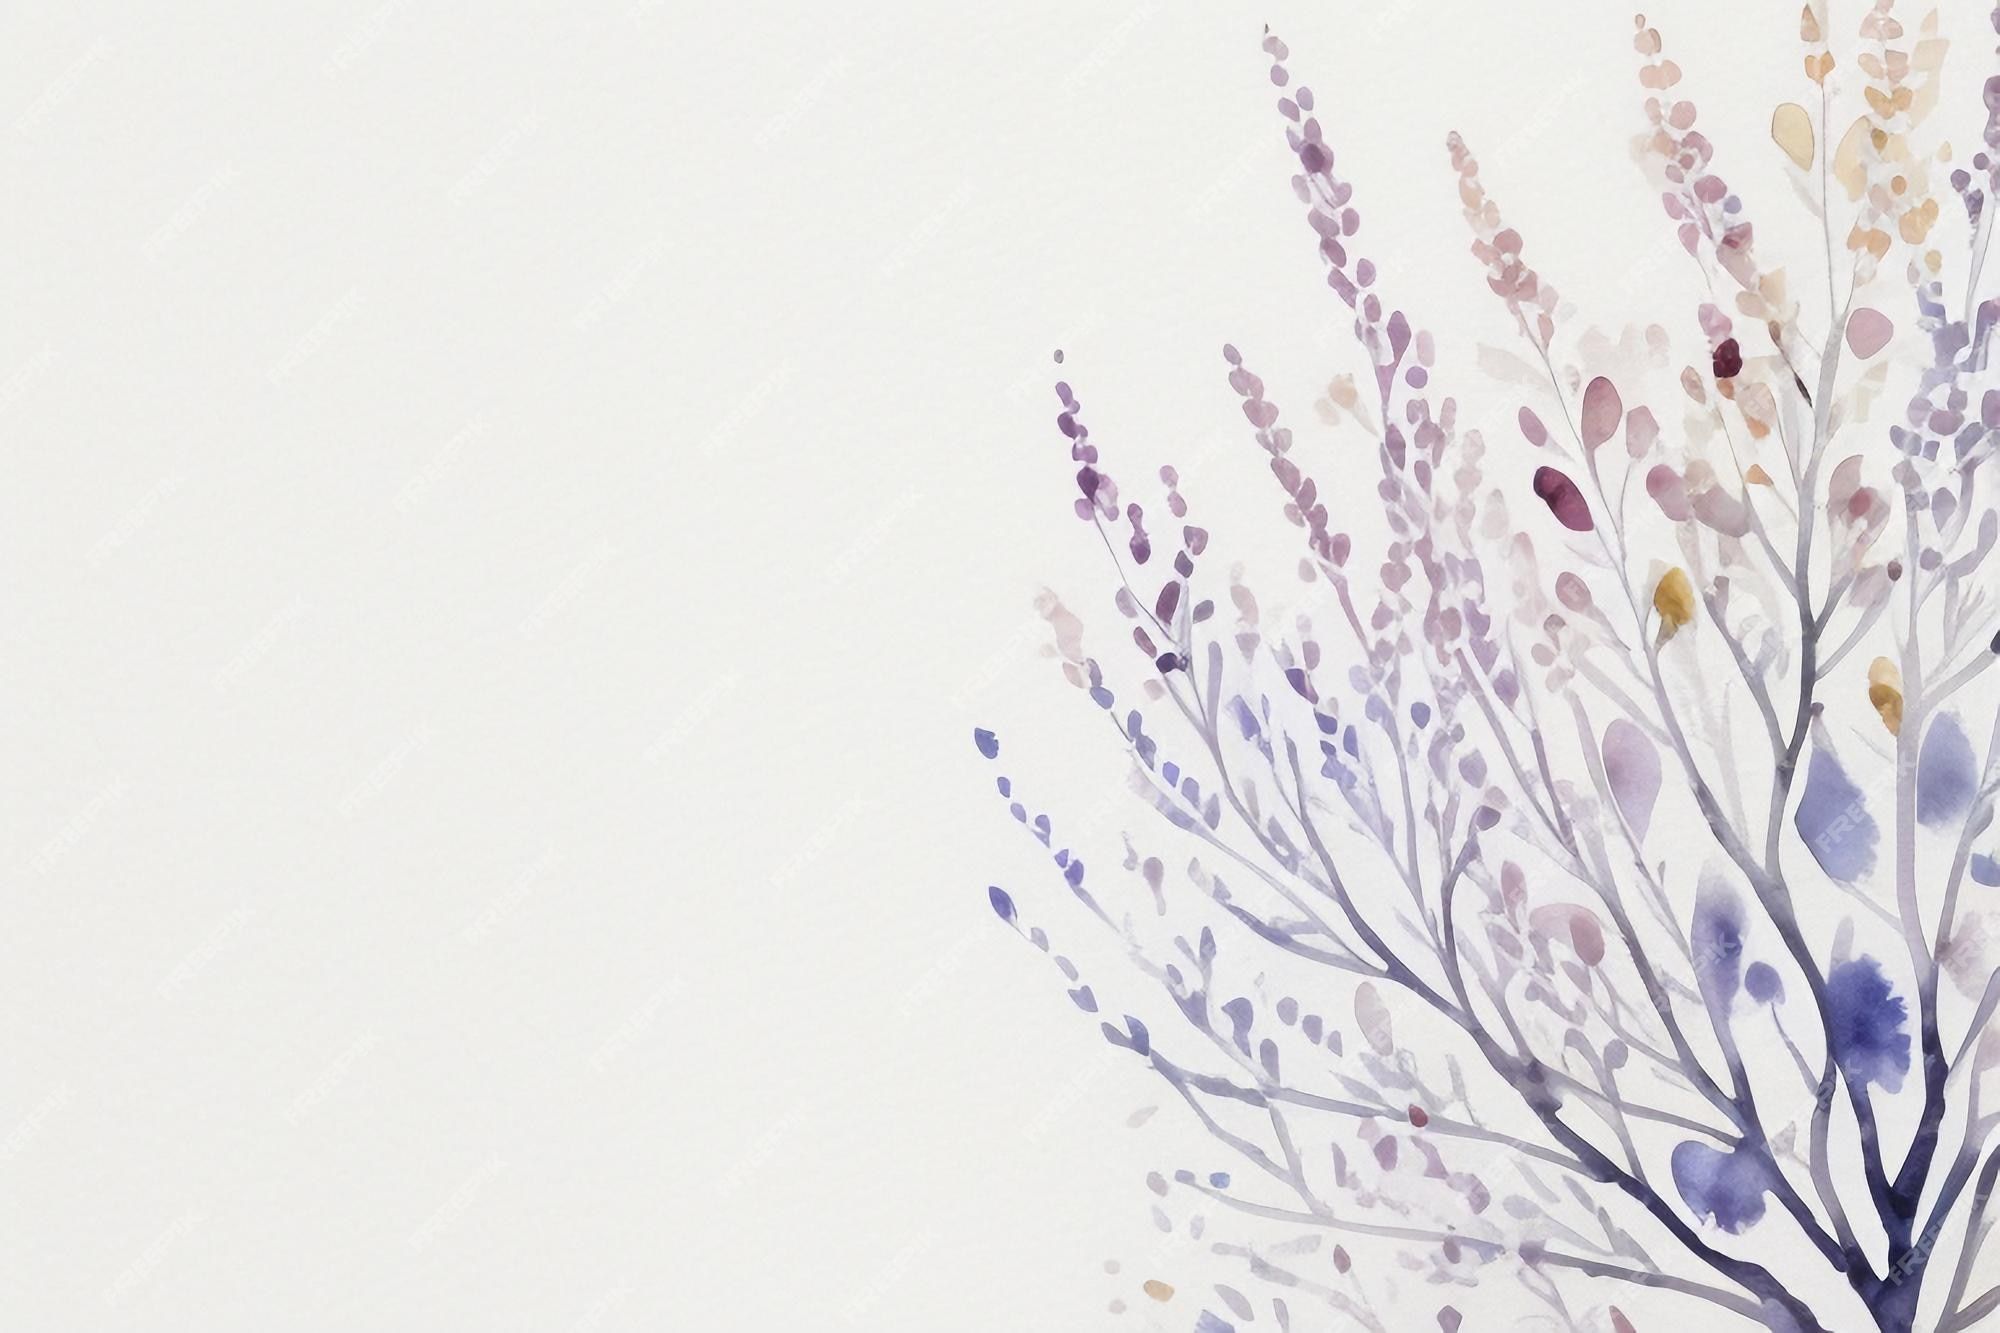 Lavender Aesthetic Image